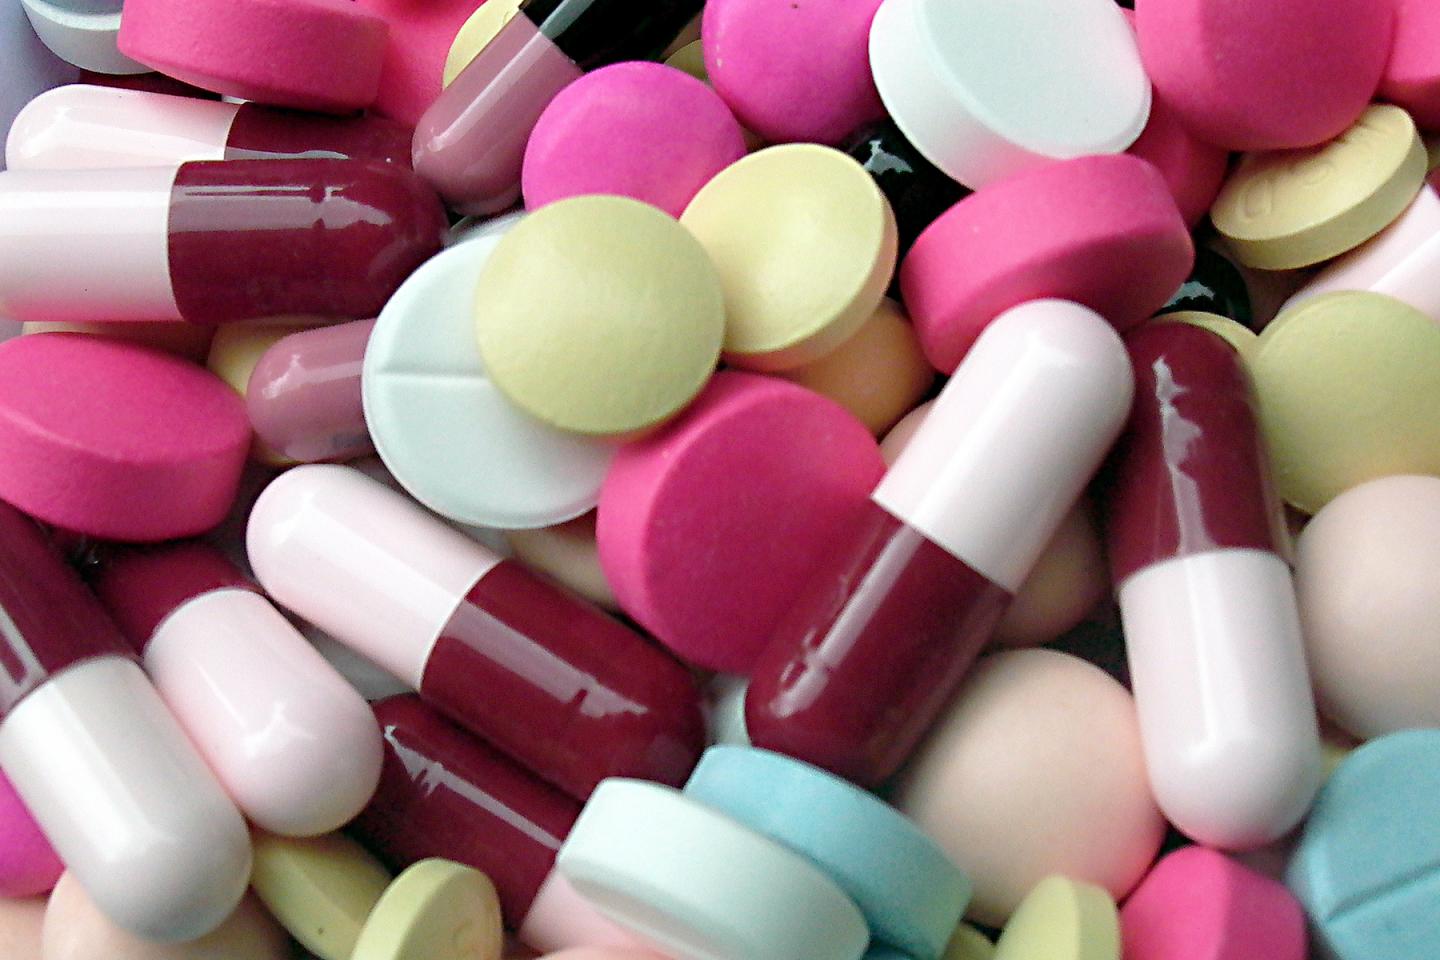 Use of alternative medicines has doubled amon